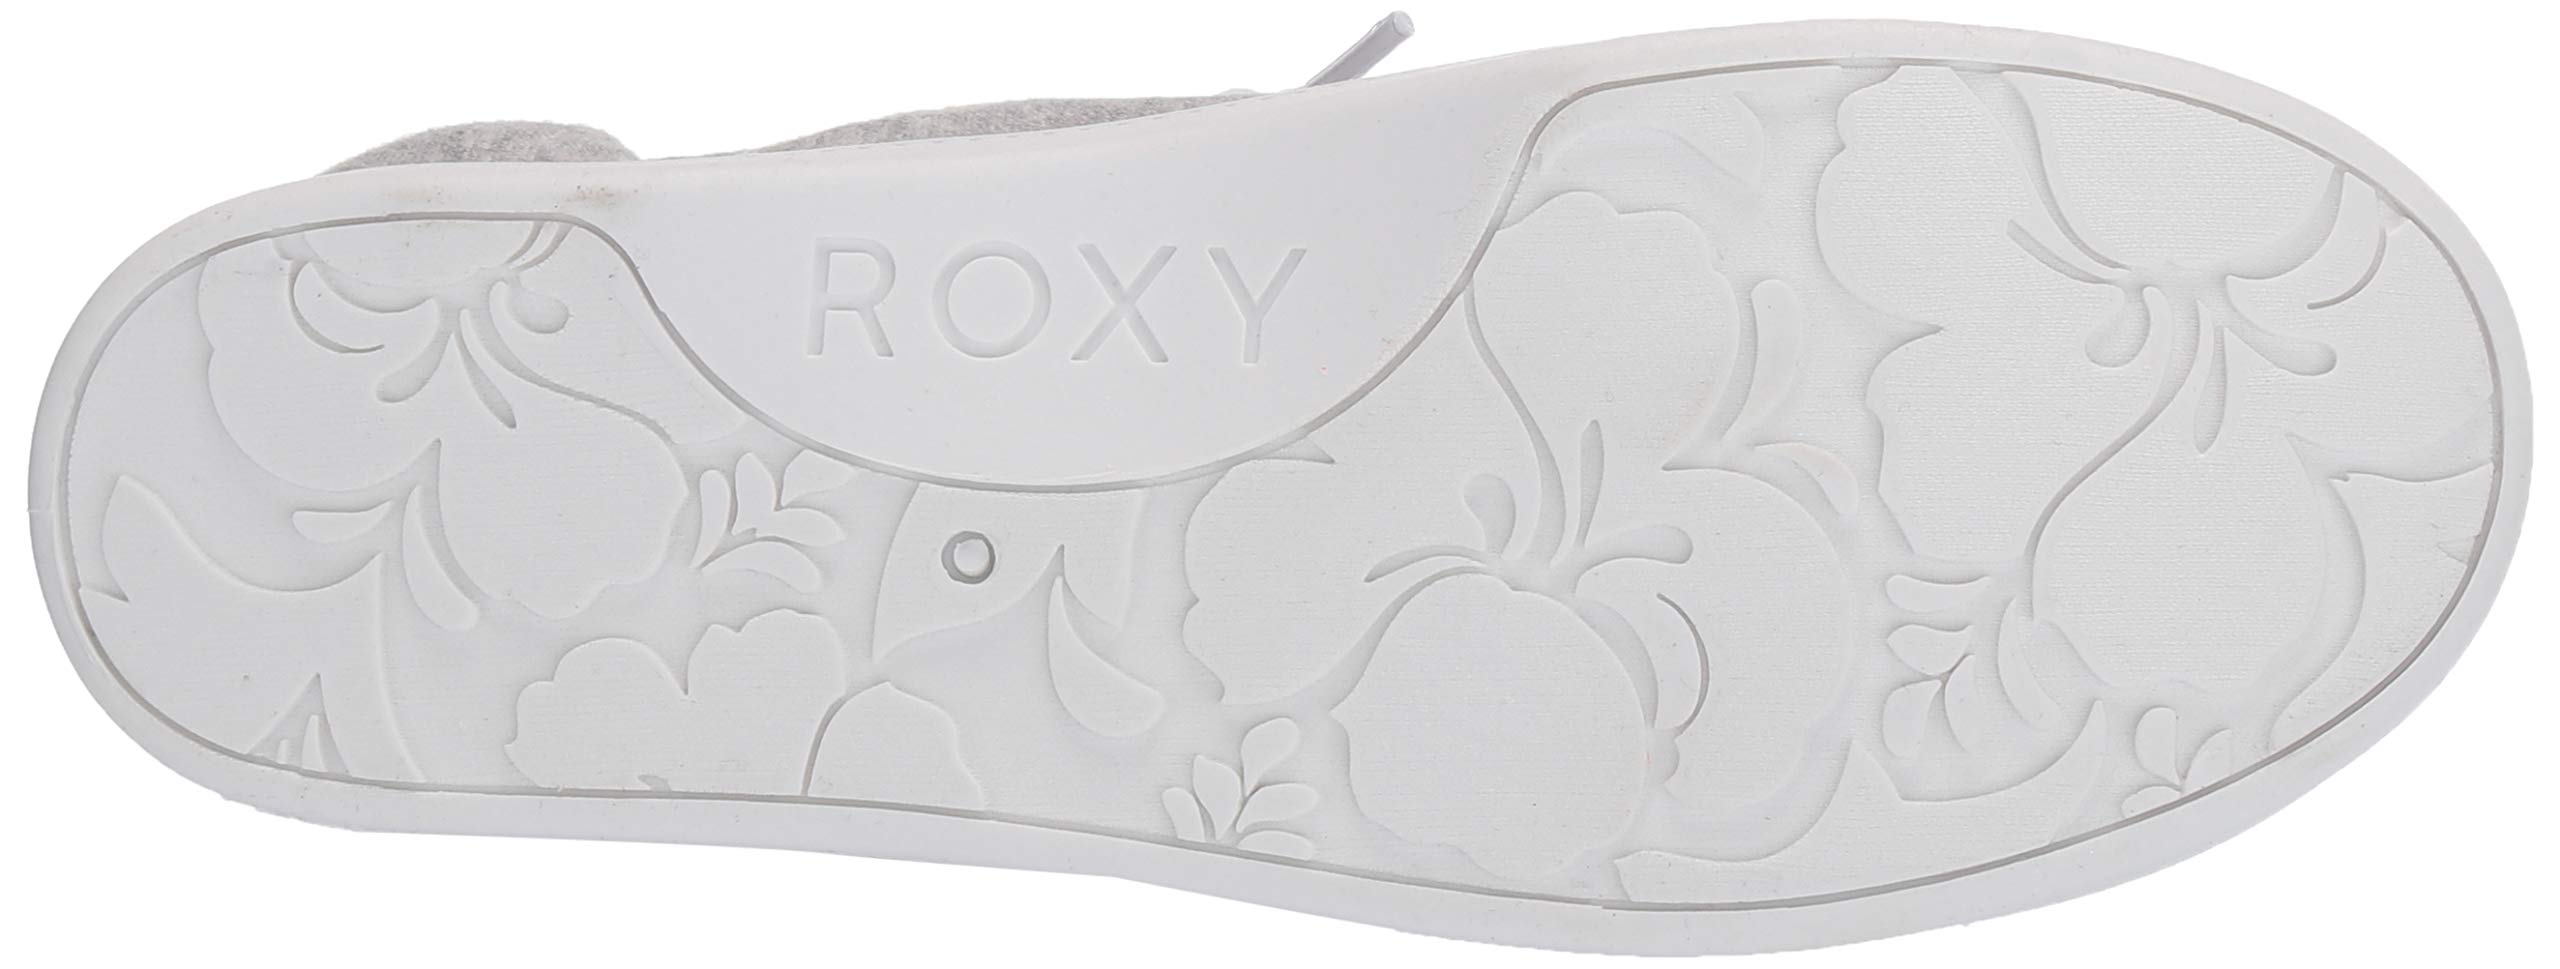 Roxy Girl's Bayshore Slip on Sneaker Shoe